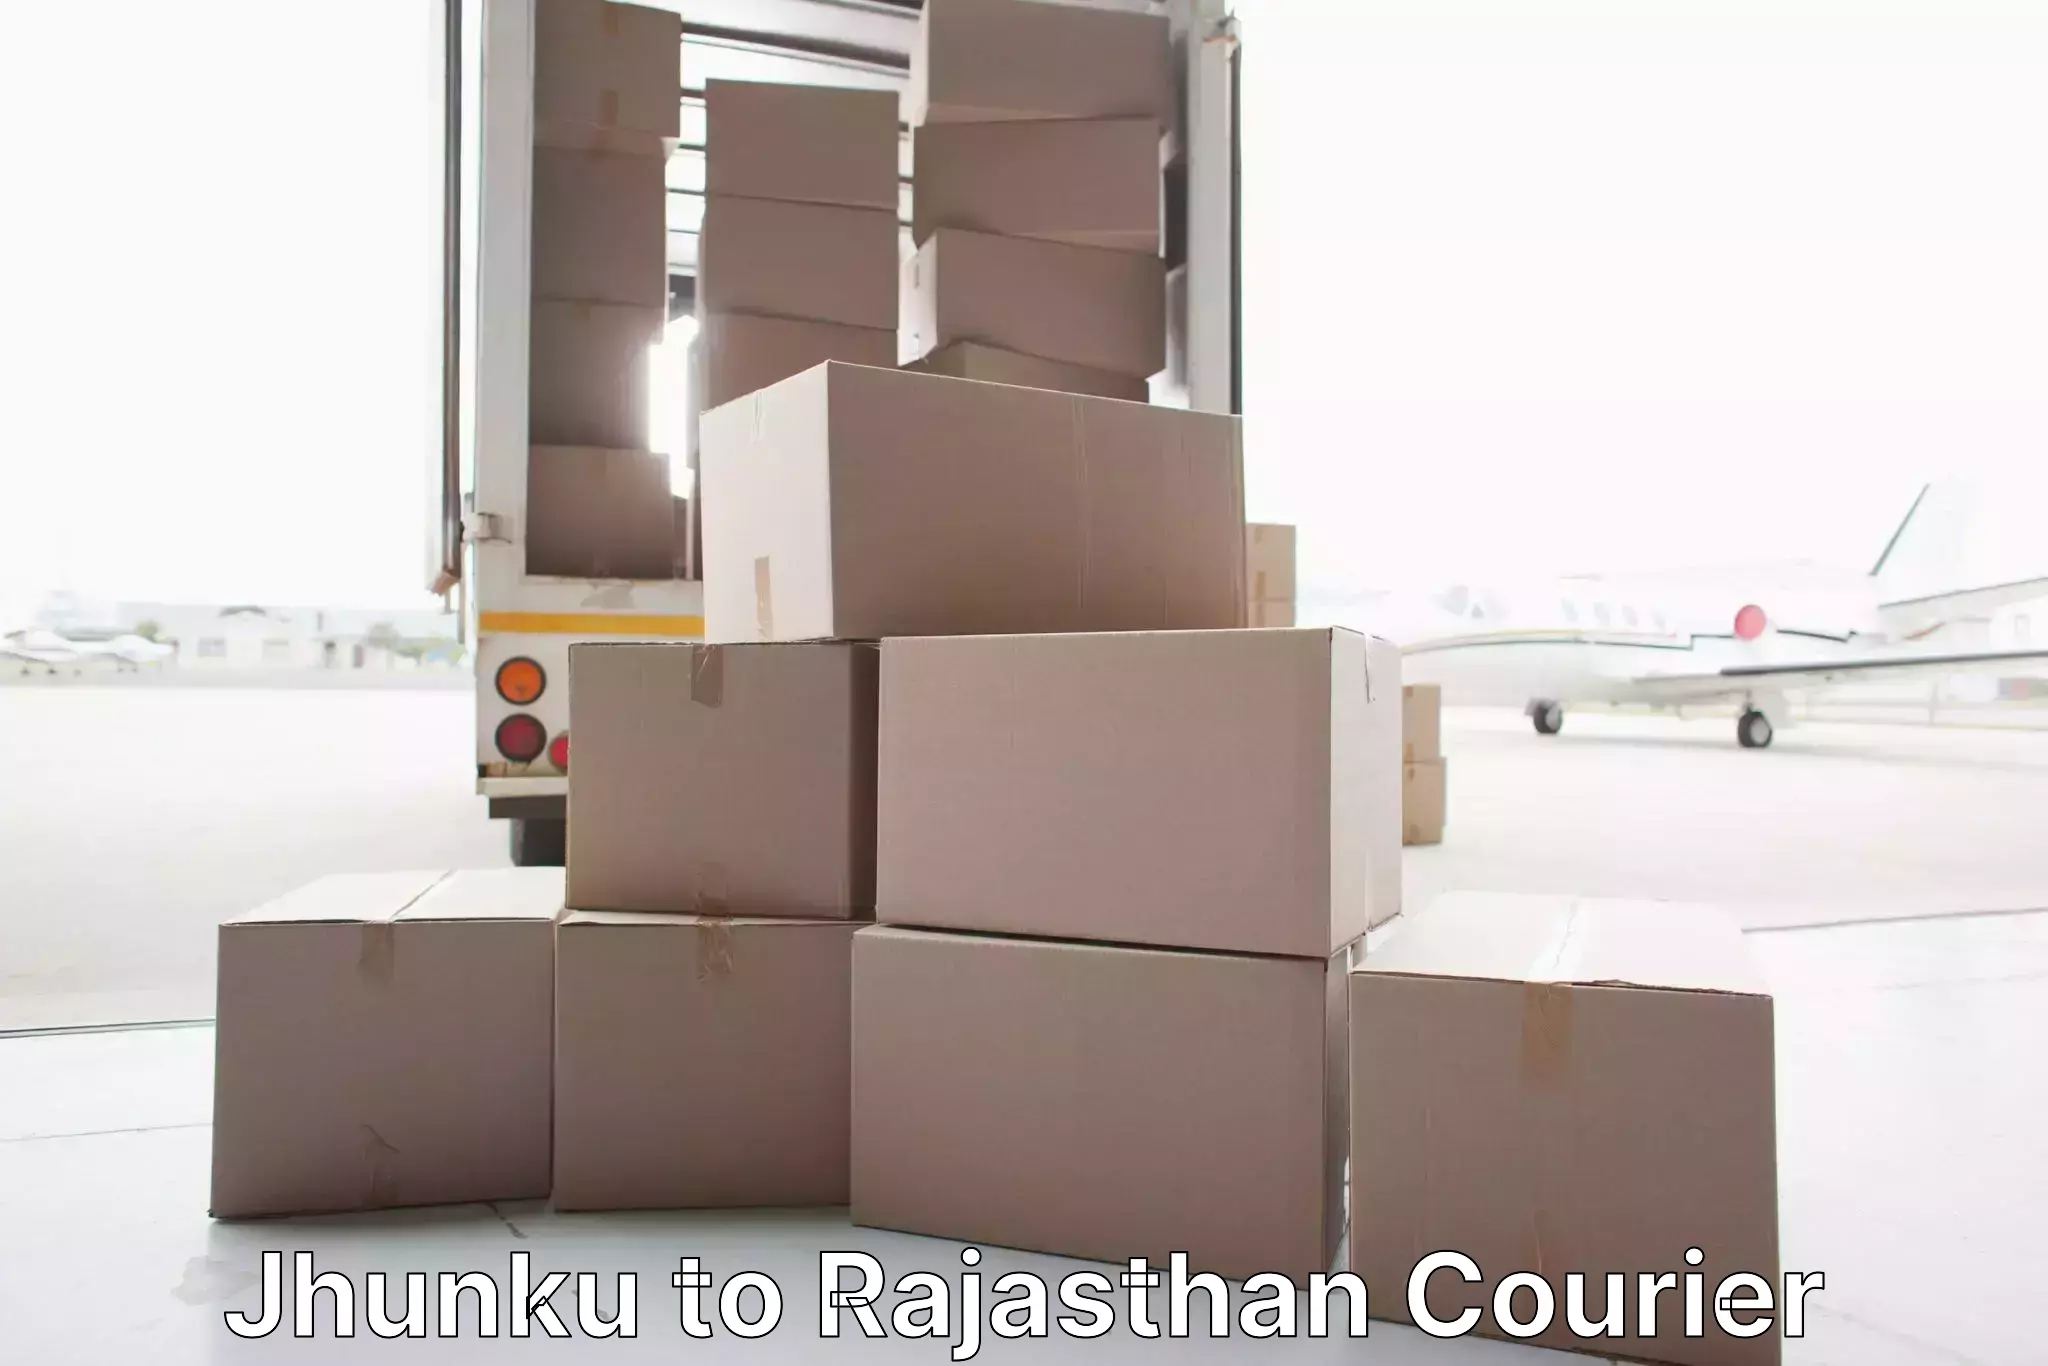 Furniture transport experts Jhunku to Mahwa